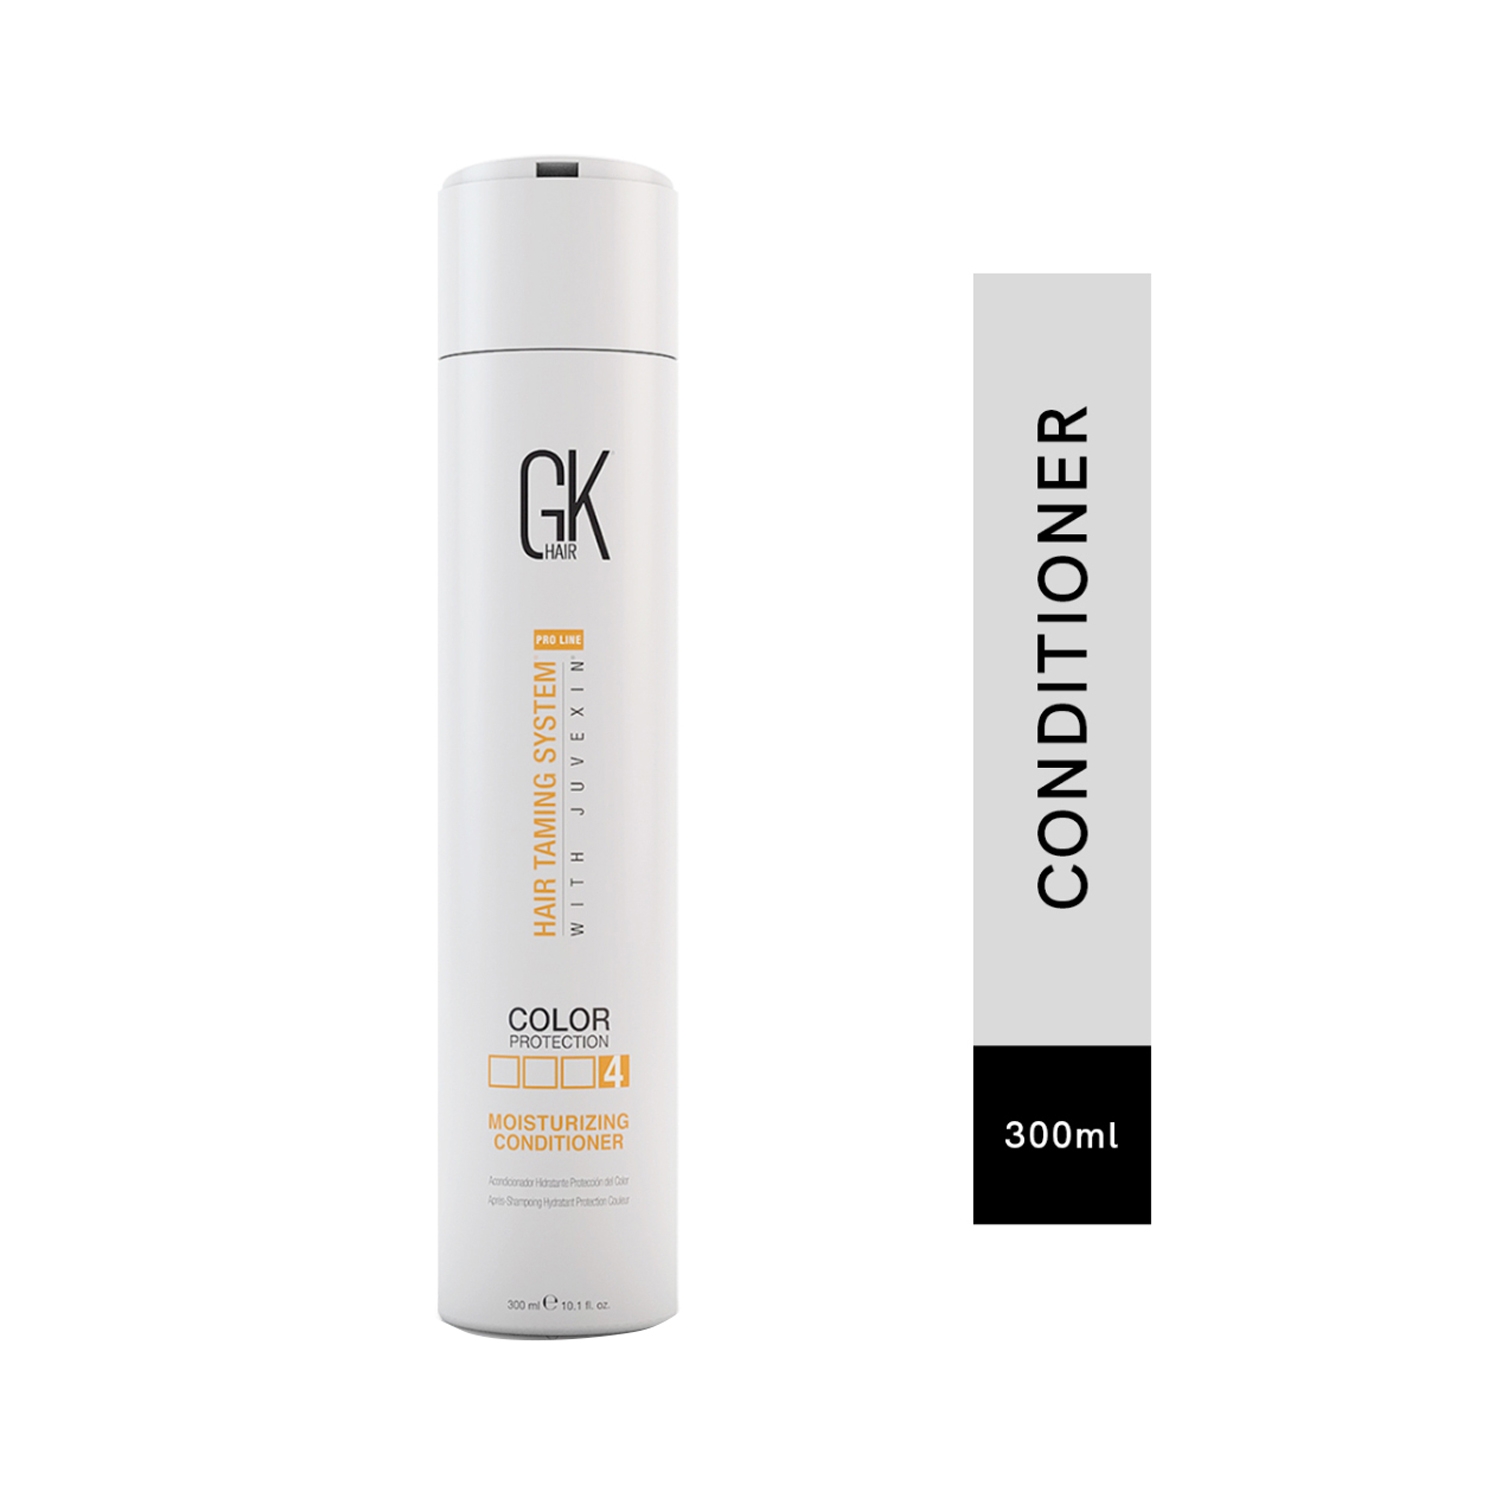 GK Hair | GK Hair Moisturizing Color Protection Conditioner (300ml)